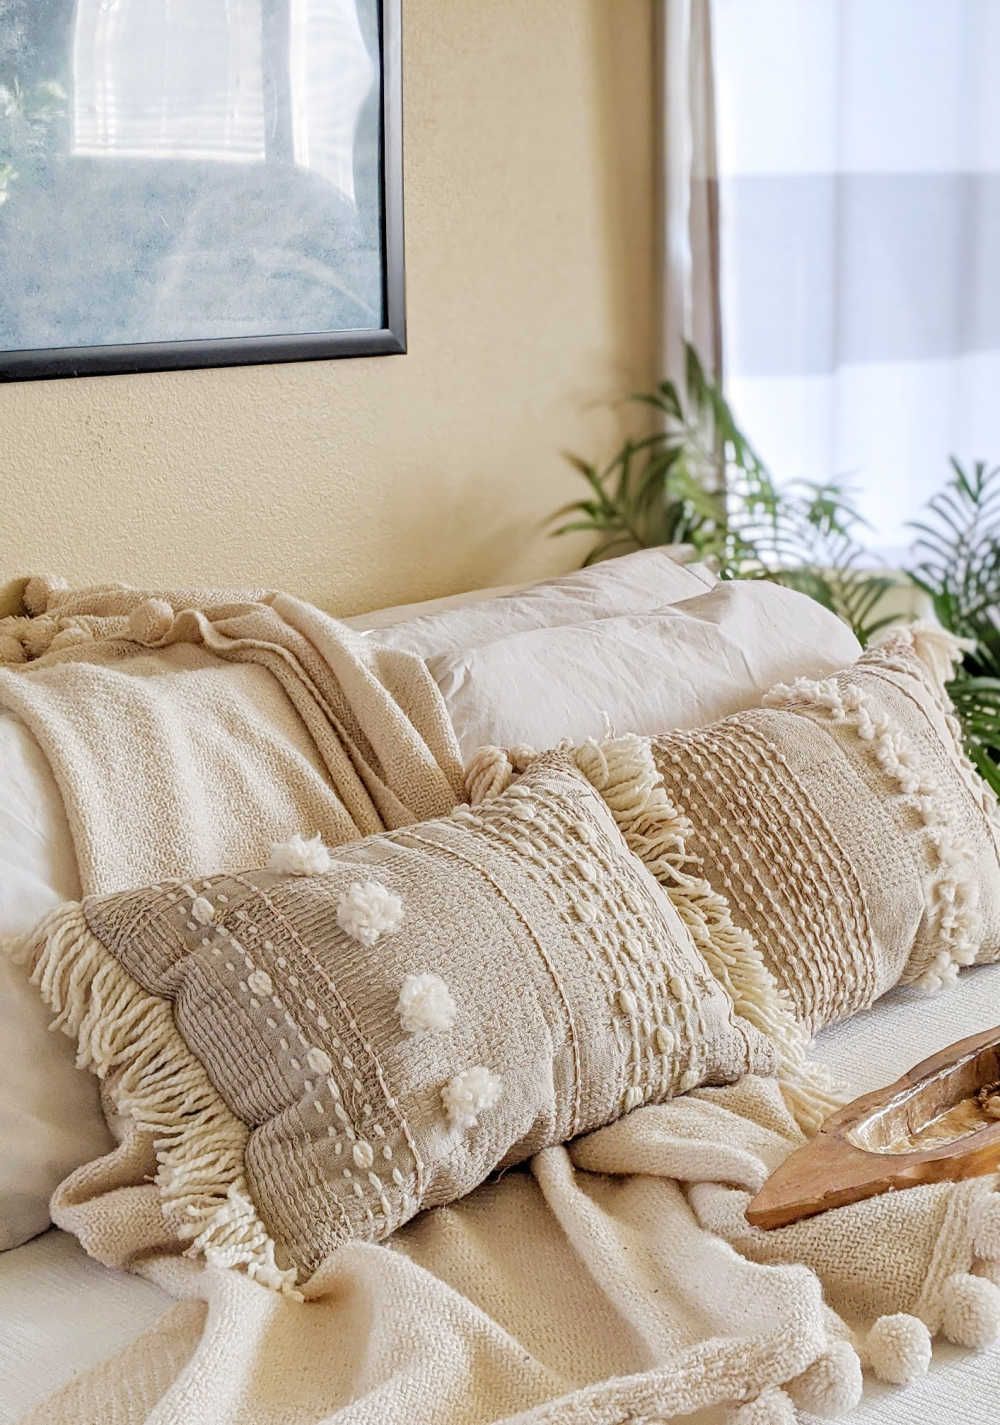 Make this Anthropologie-Inspired DIY Textured Pillow for $2! - Make this Anthropologie-Inspired DIY Textured Pillow for $2! -   18 diy Pillows boho ideas